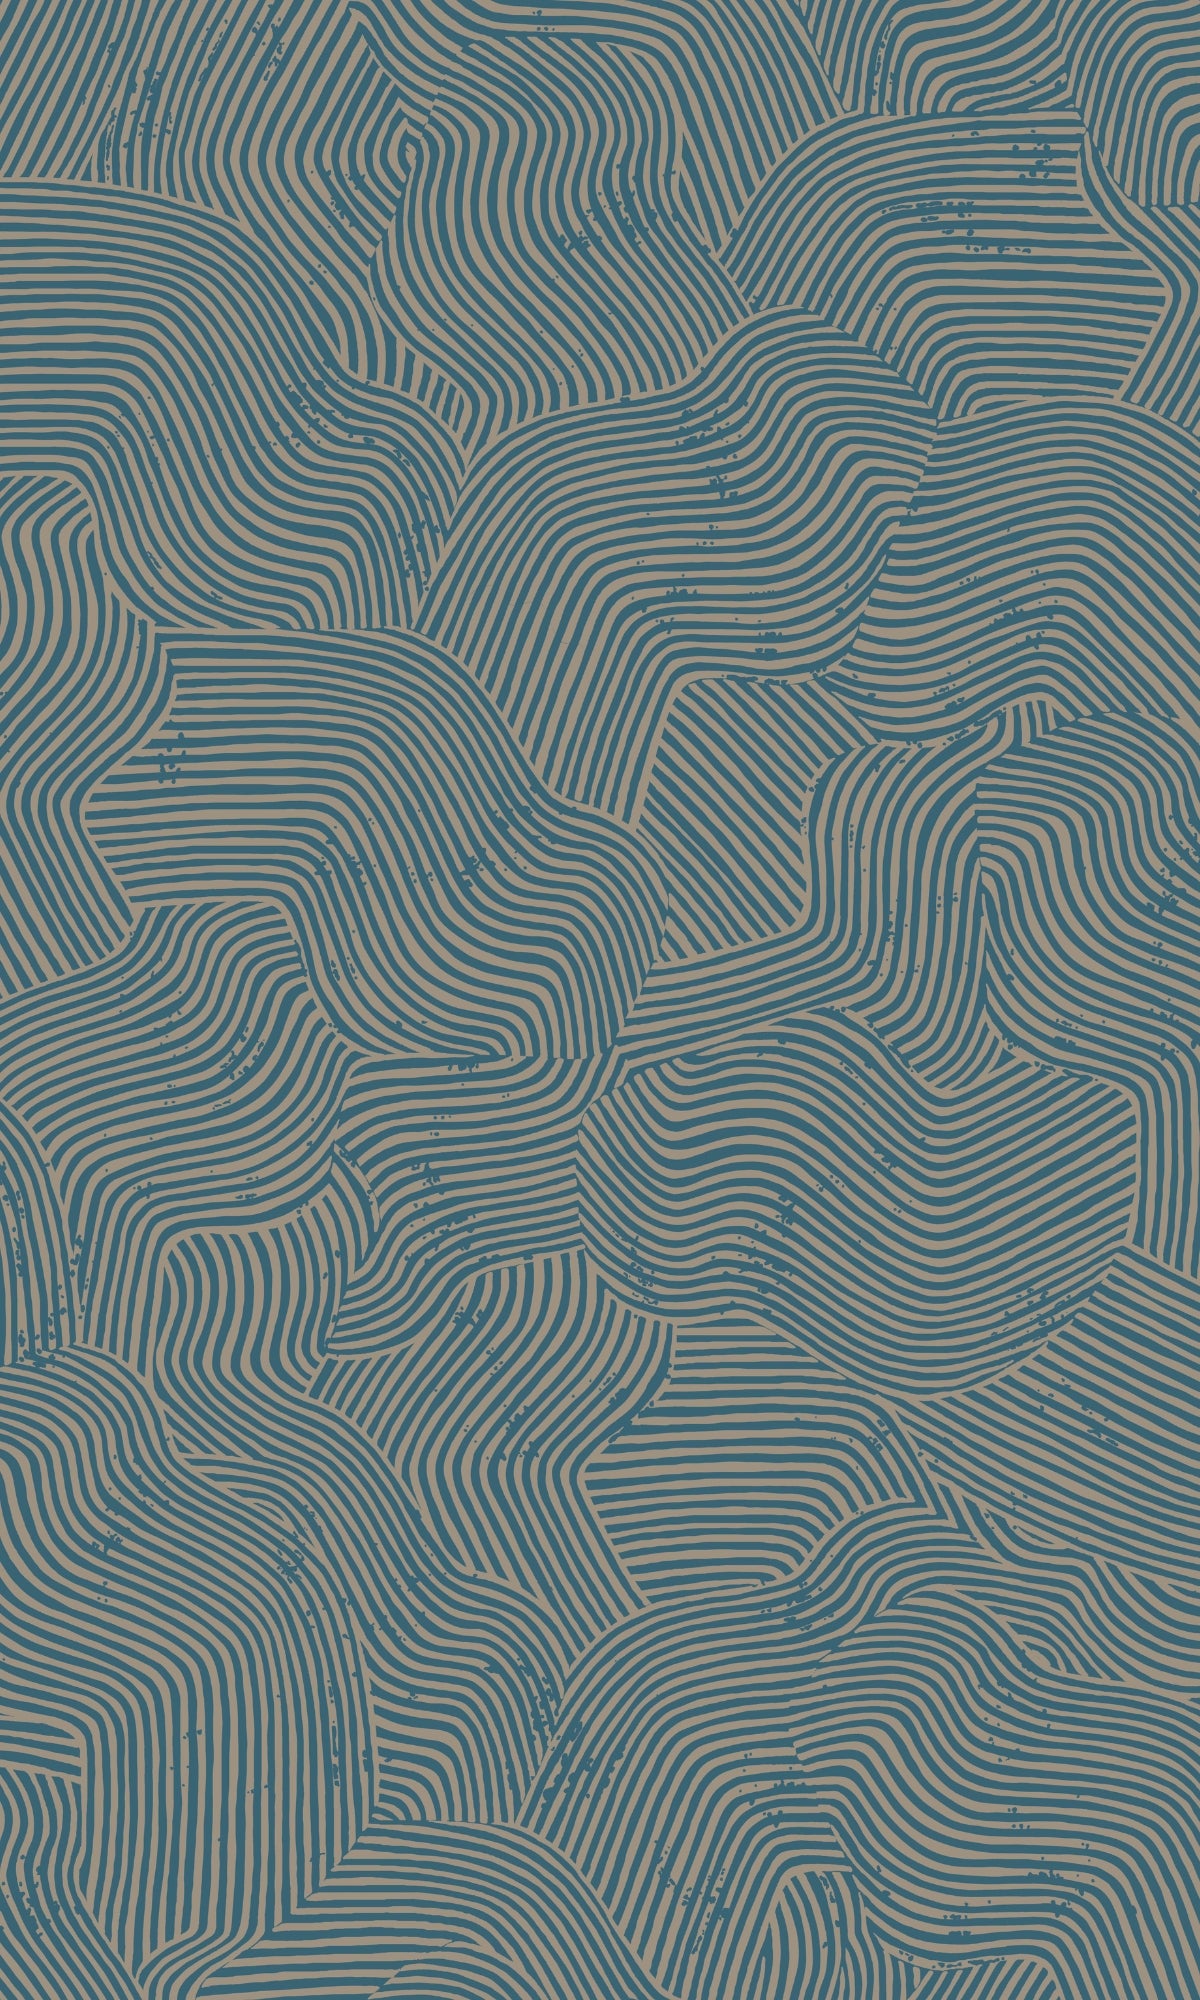 Petrol Abstract Geometric Waves Wallpaper R9107